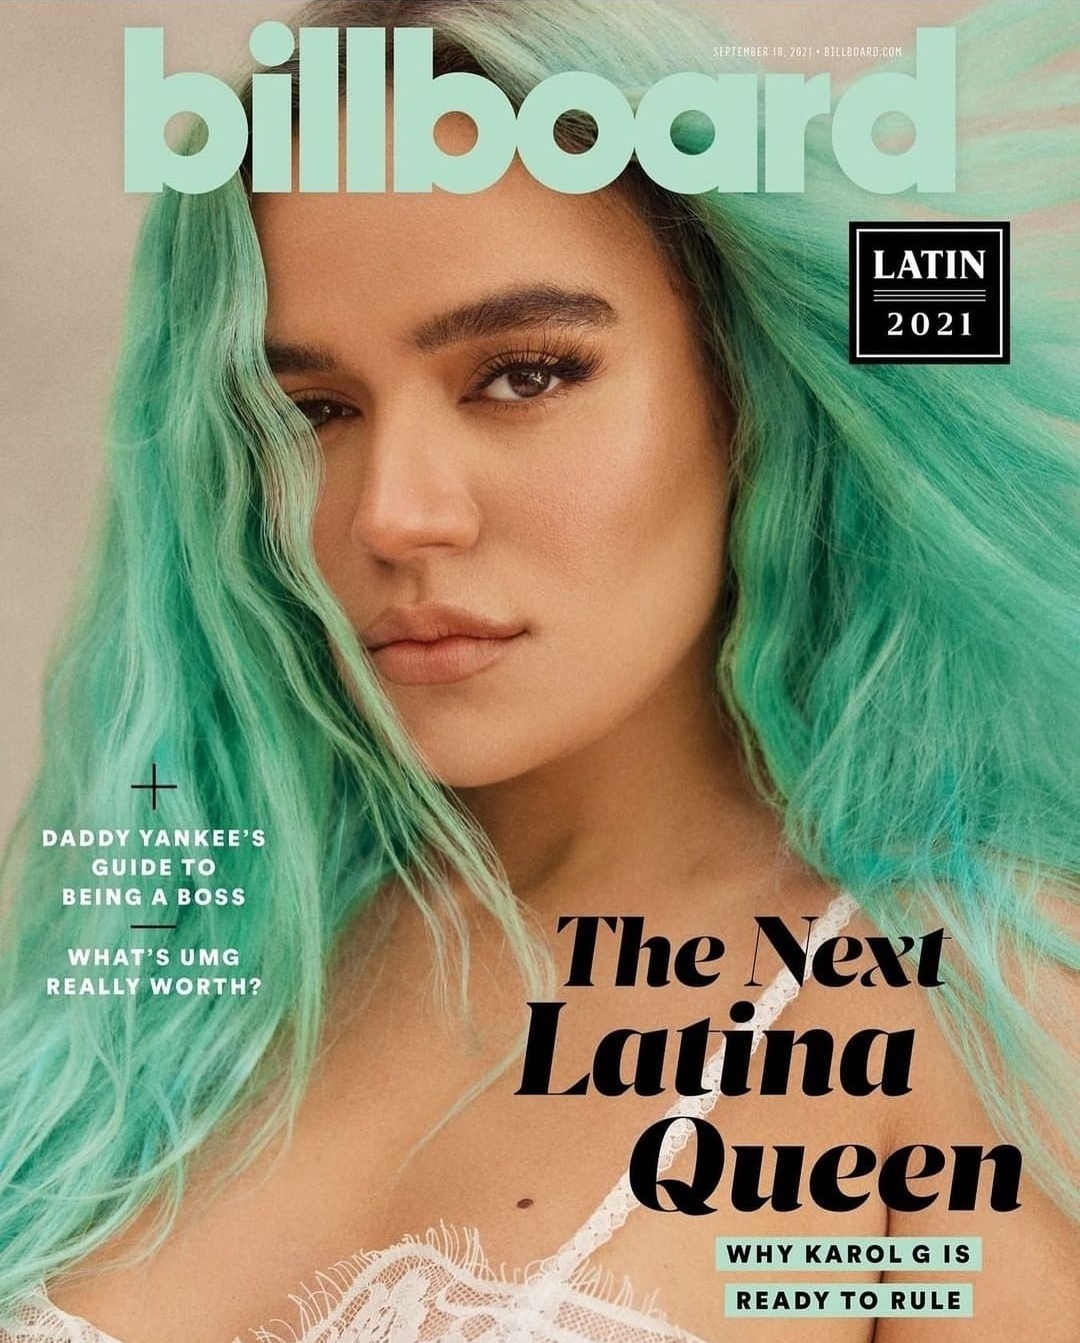 Karol G, 'la próxima reina latina', según la revista Billboard - Infobae